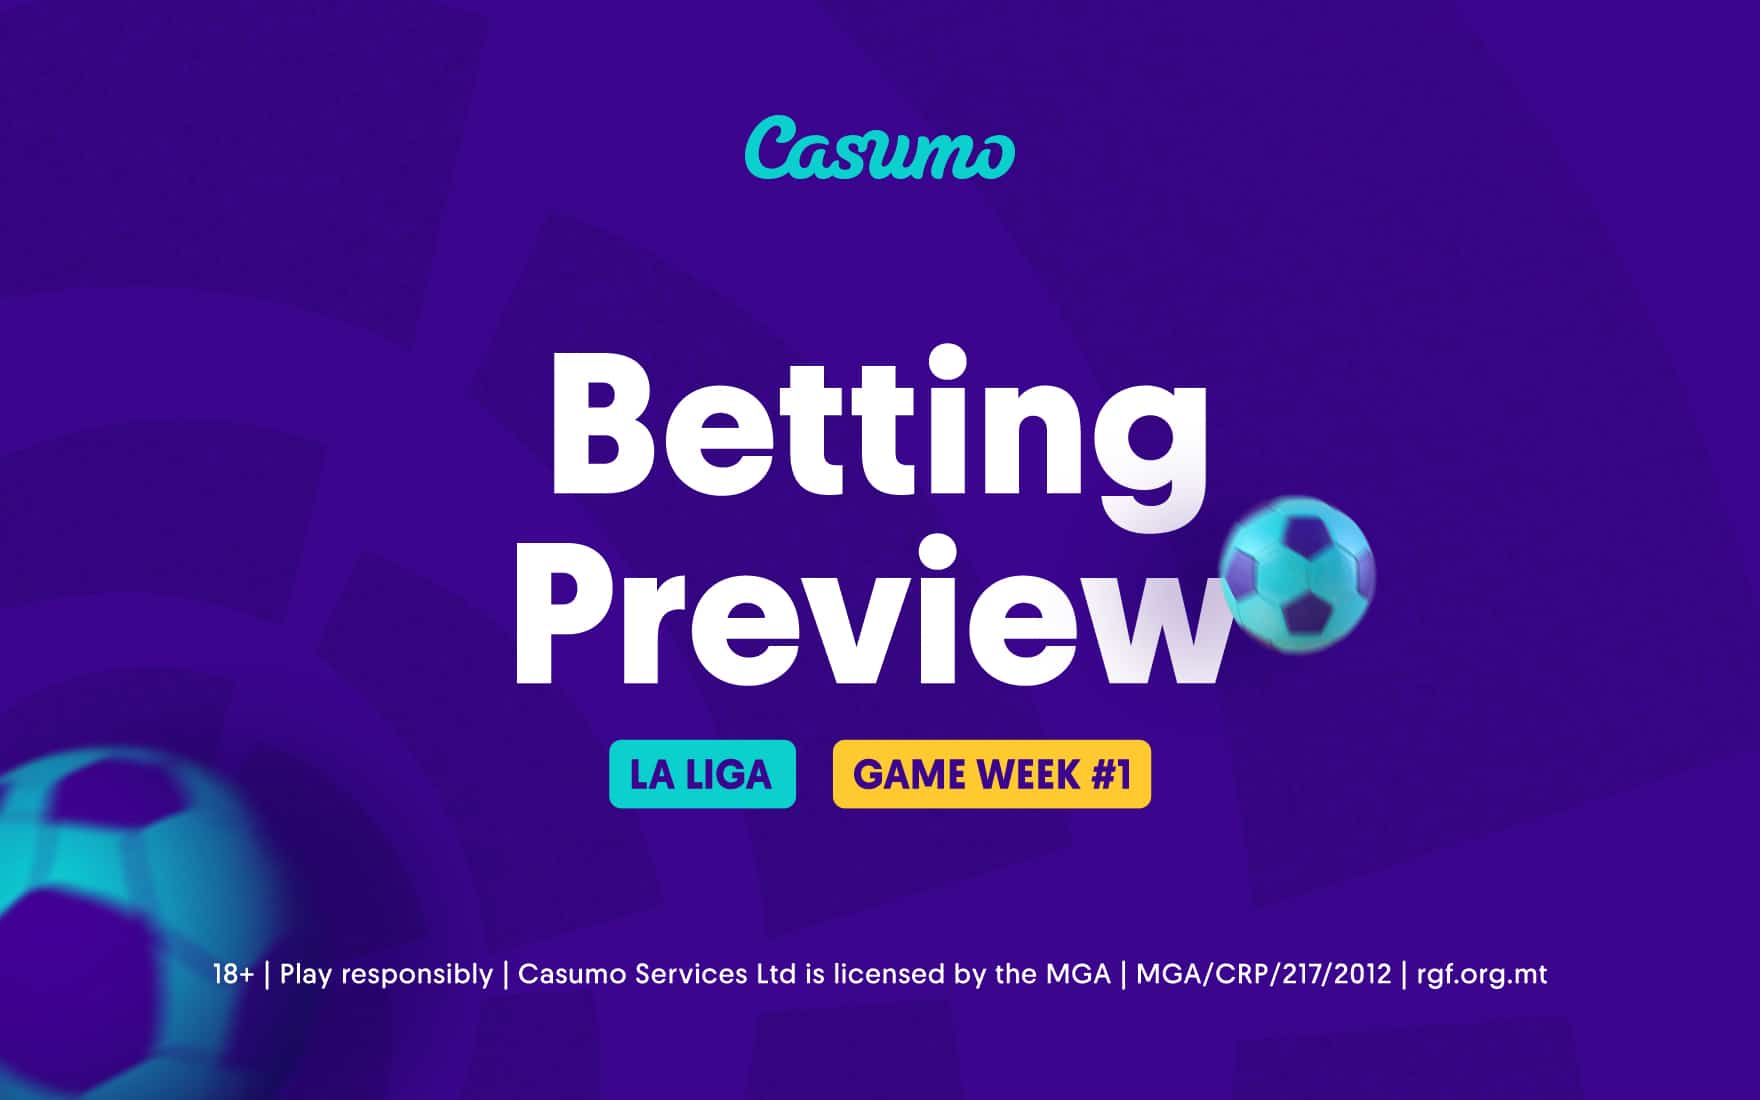 La Liga Betting Preview Week 1 Casumo 2020|Betting Preview Casumo 2020